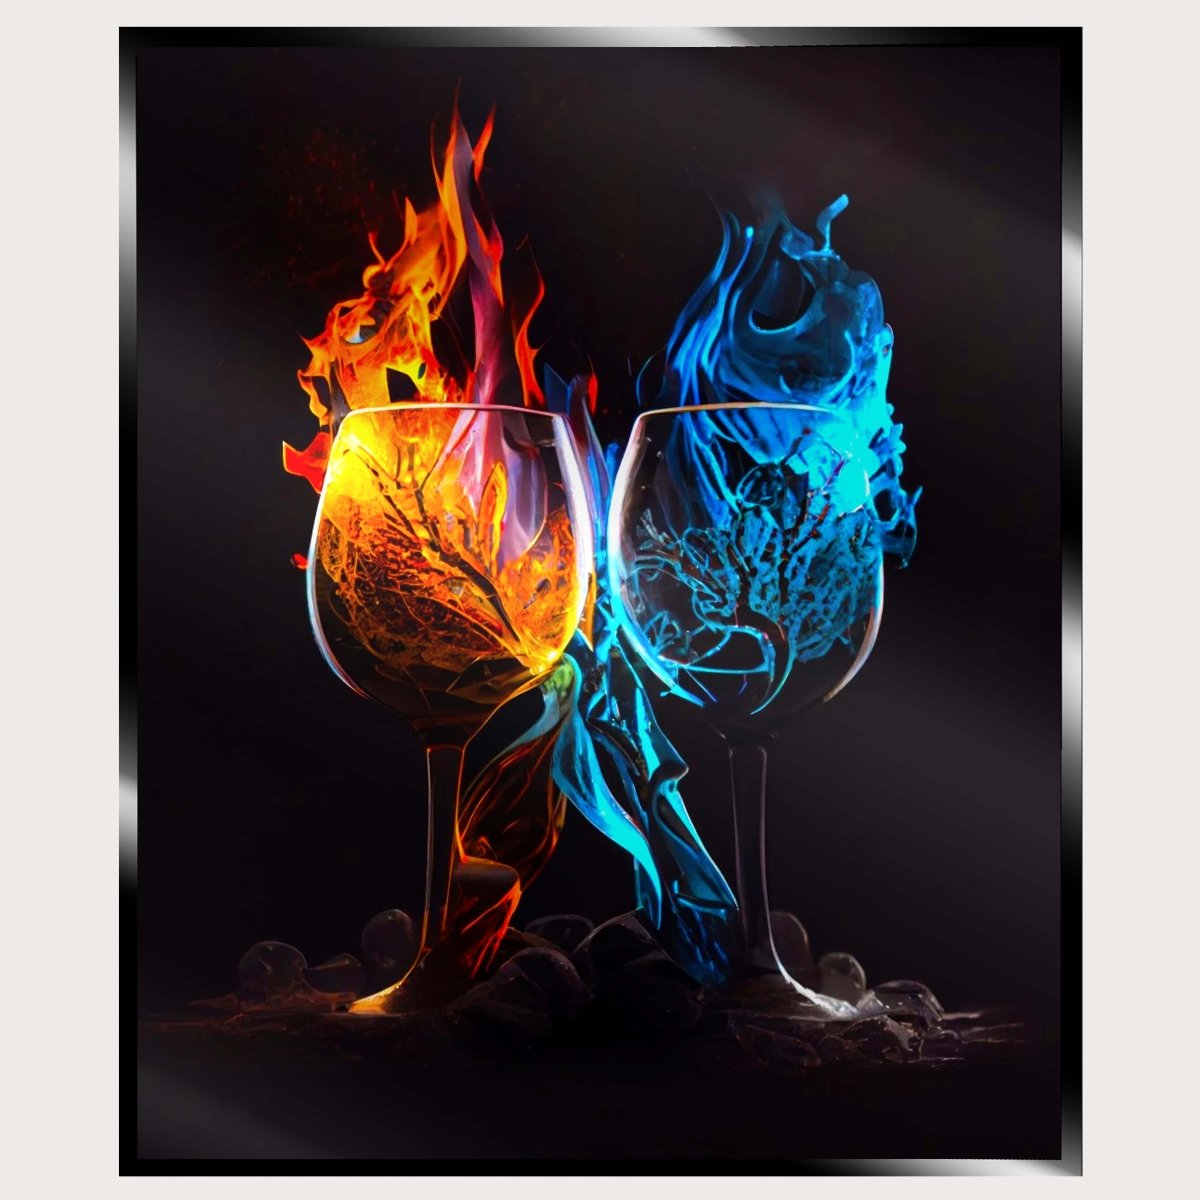 Illuminated Wall Art - Fire and Ice Wine Glasses - madaboutneon